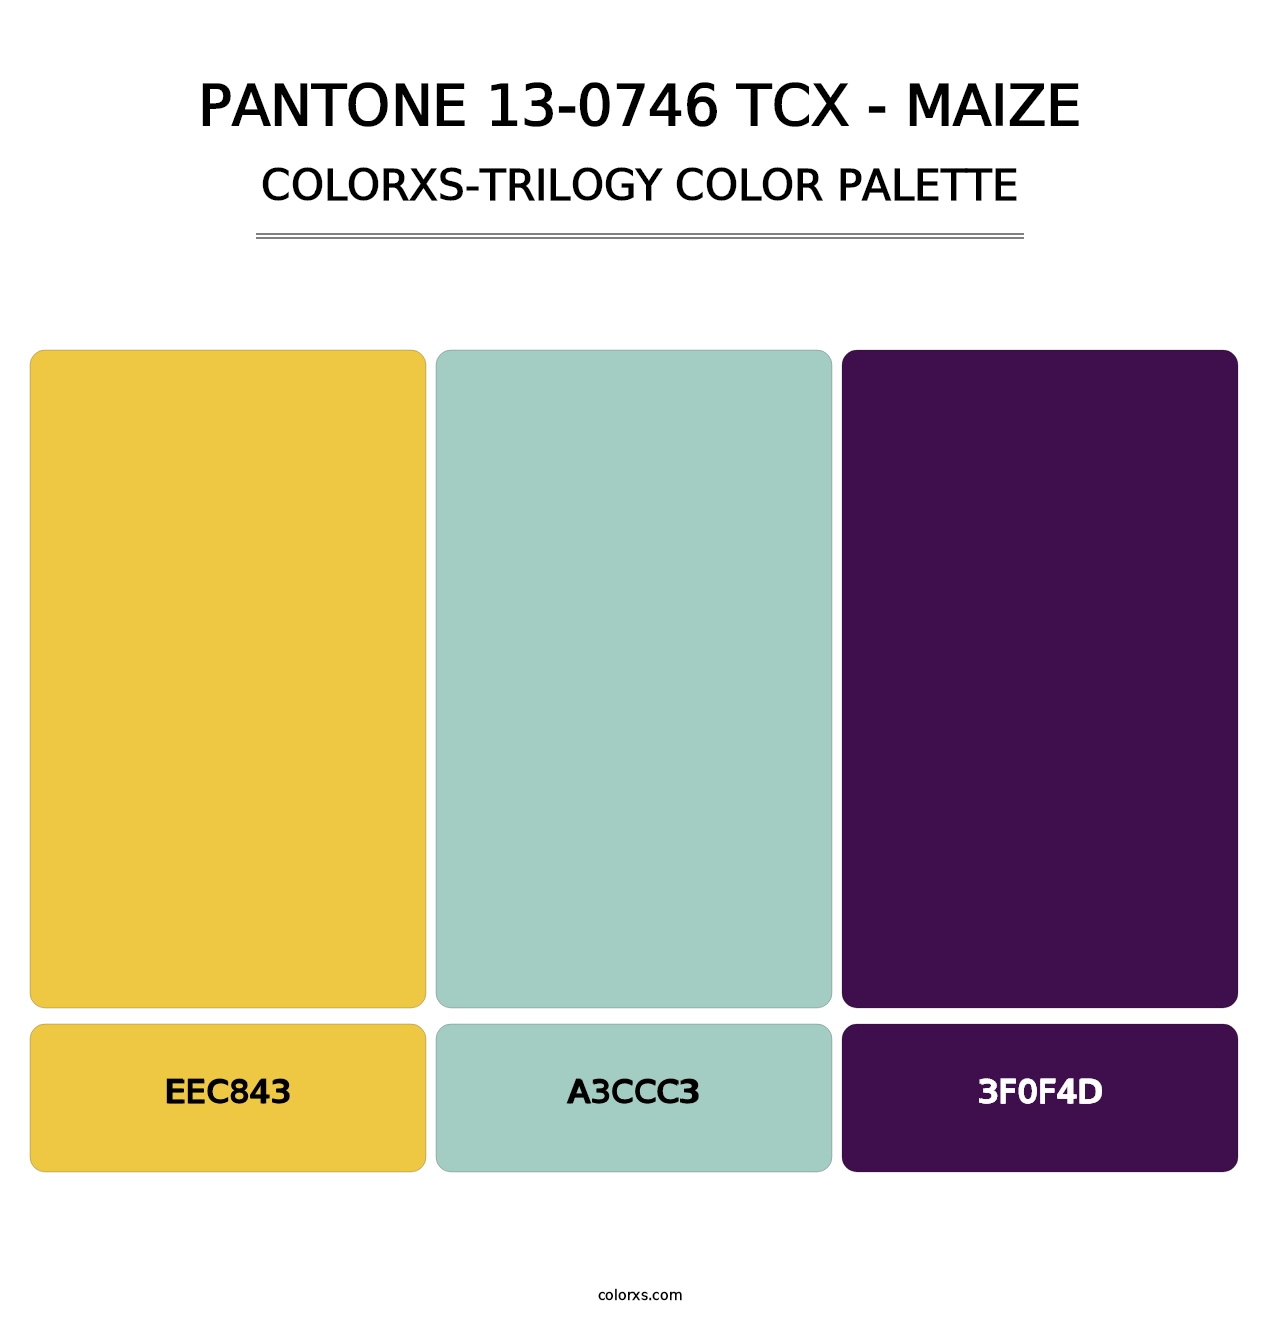 PANTONE 13-0746 TCX - Maize - Colorxs Trilogy Palette